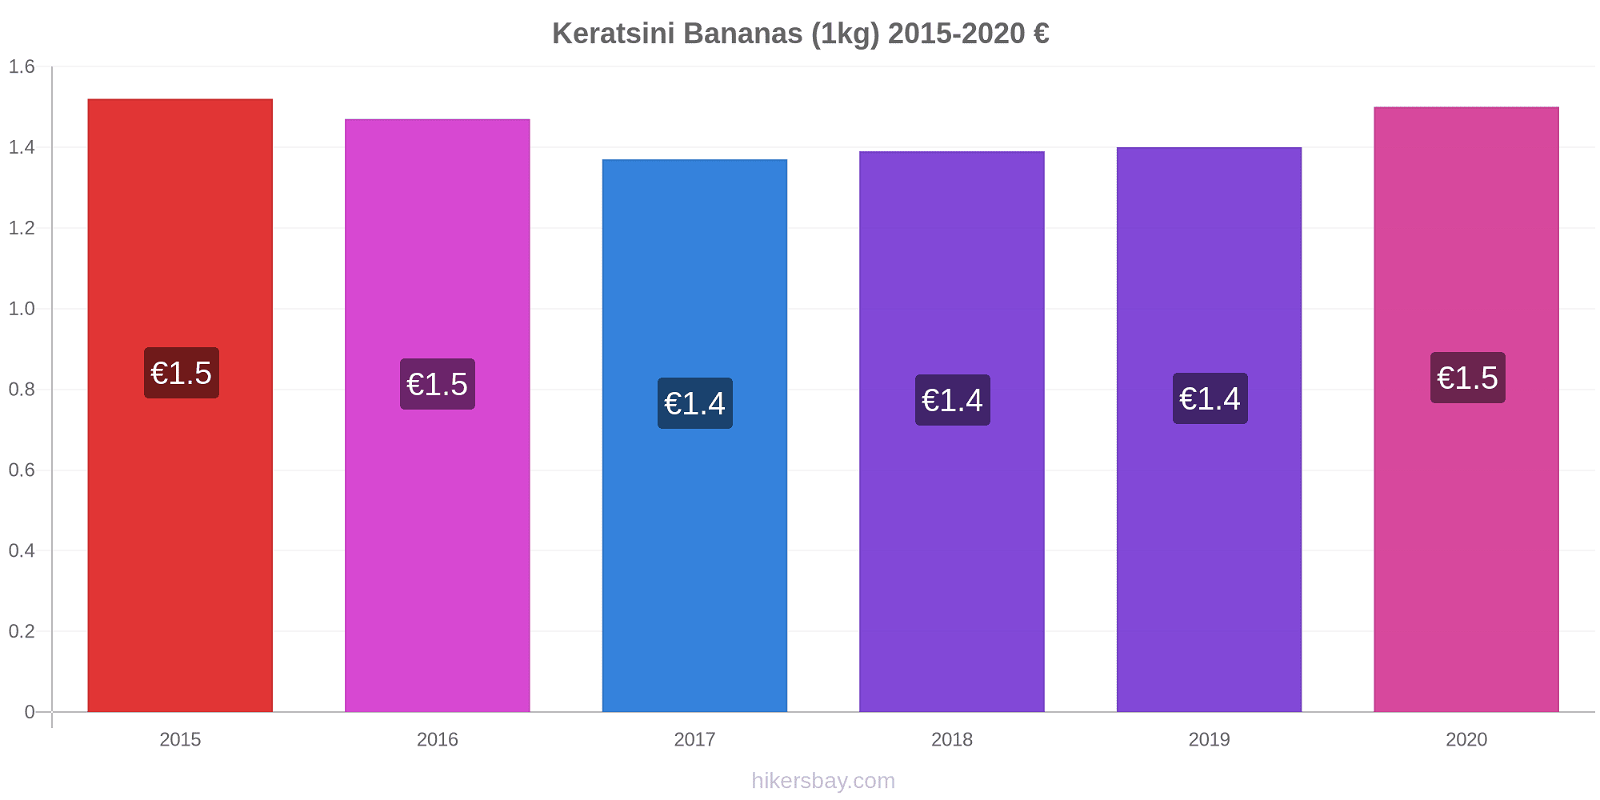 Keratsini price changes Bananas (1kg) hikersbay.com